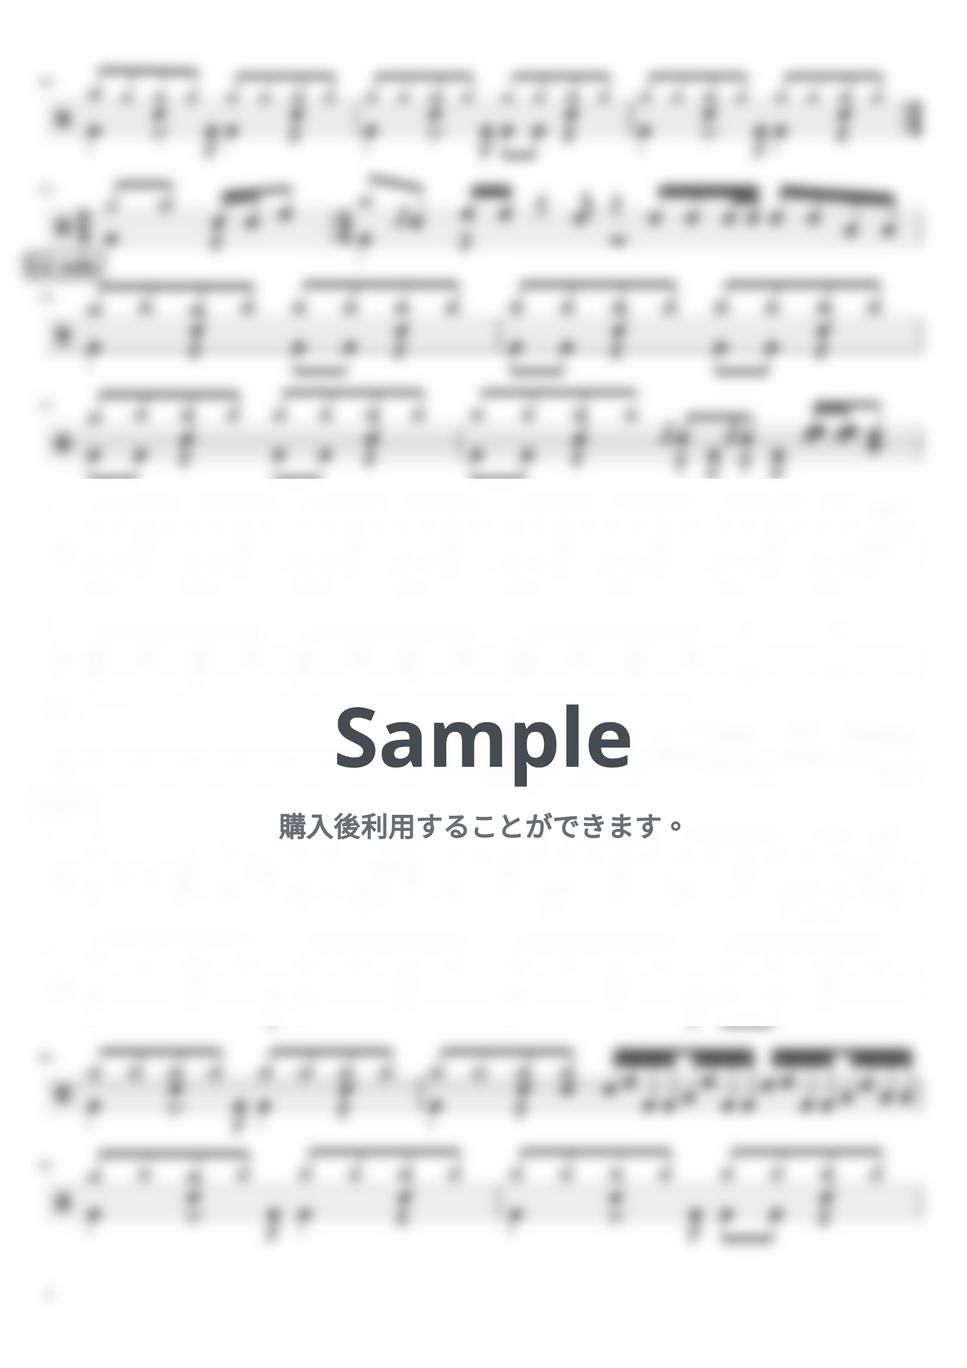 B'z - 月光 (ドラム譜面) by cabal